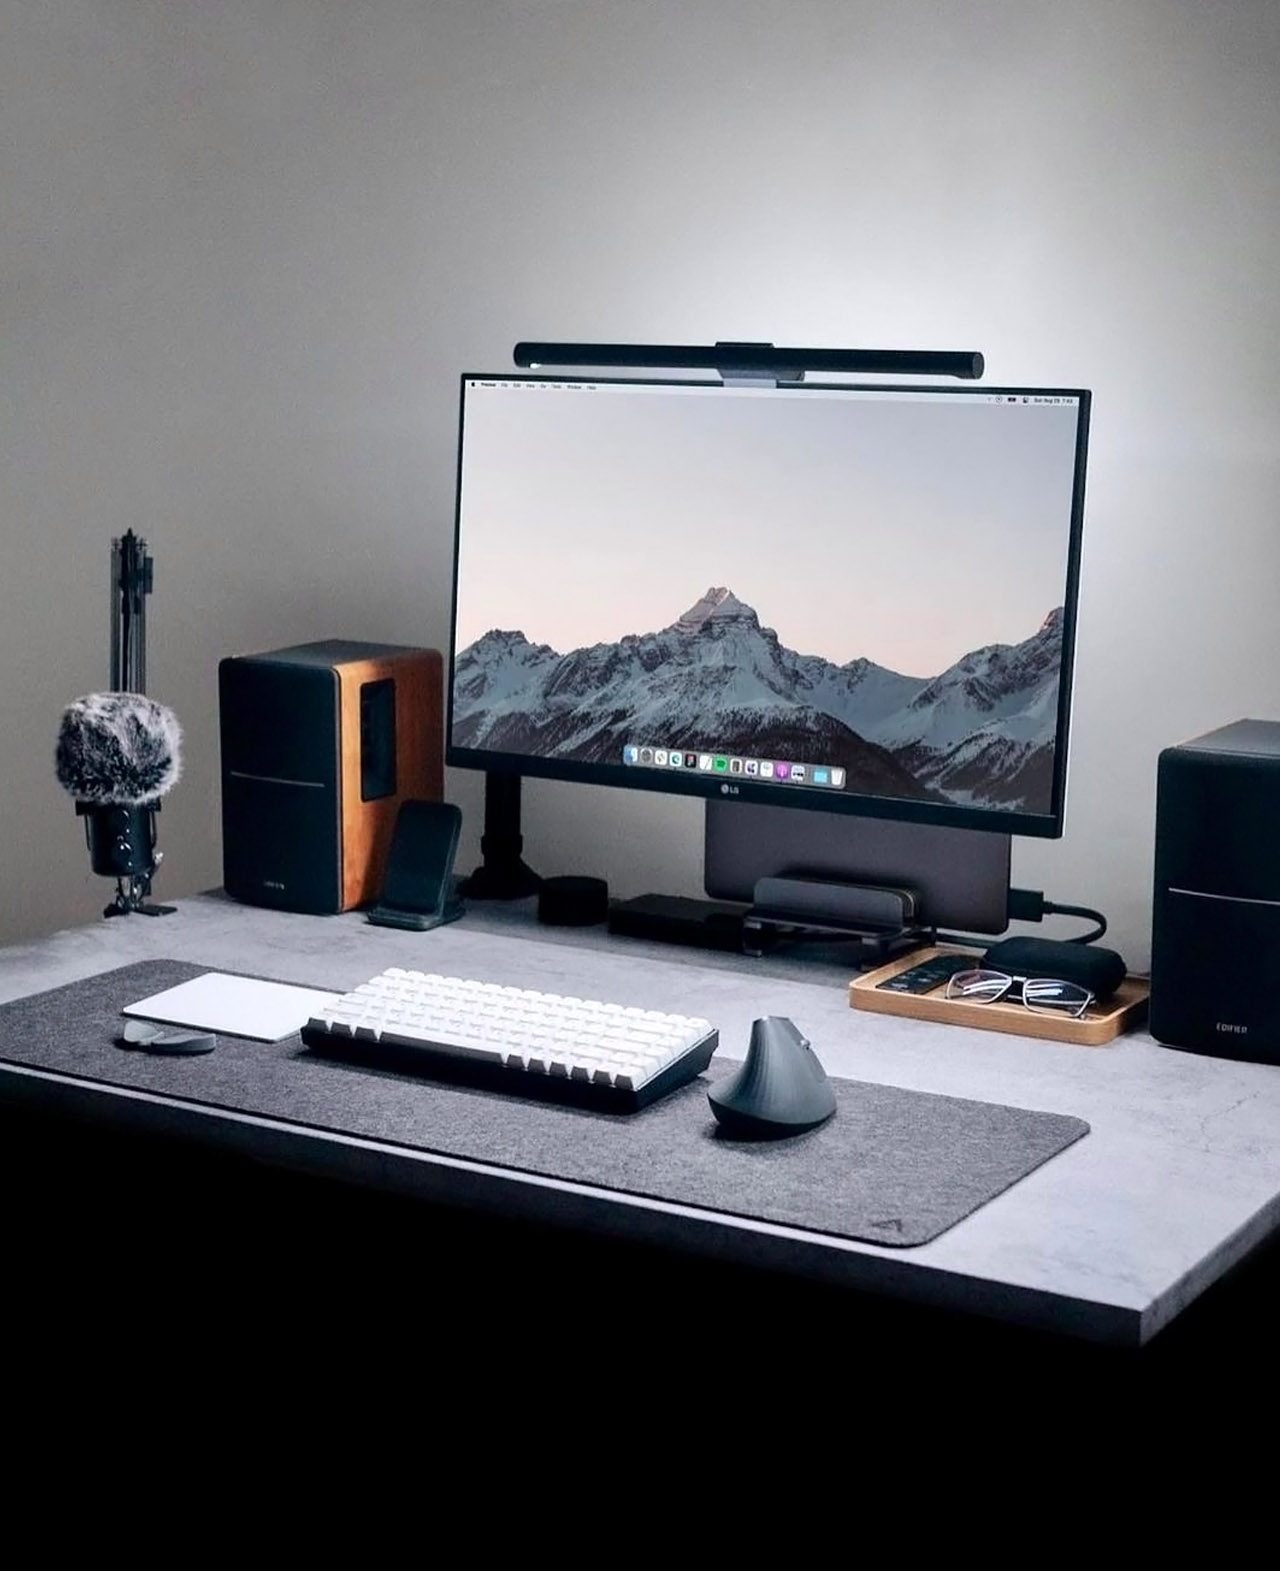 https://www.yankodesign.com/images/design_news/2021/09/desk-setups/minimal_clean_desk_setups_04.jpg